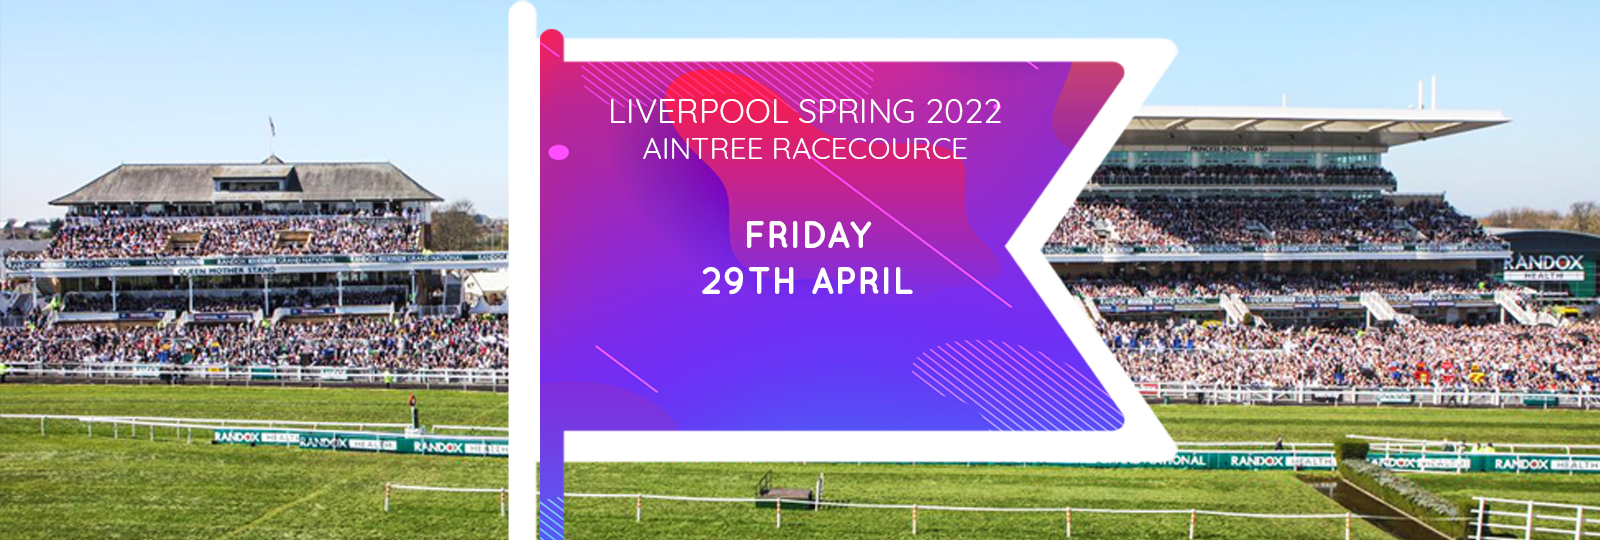 Liverpool Spring 2022 Fair